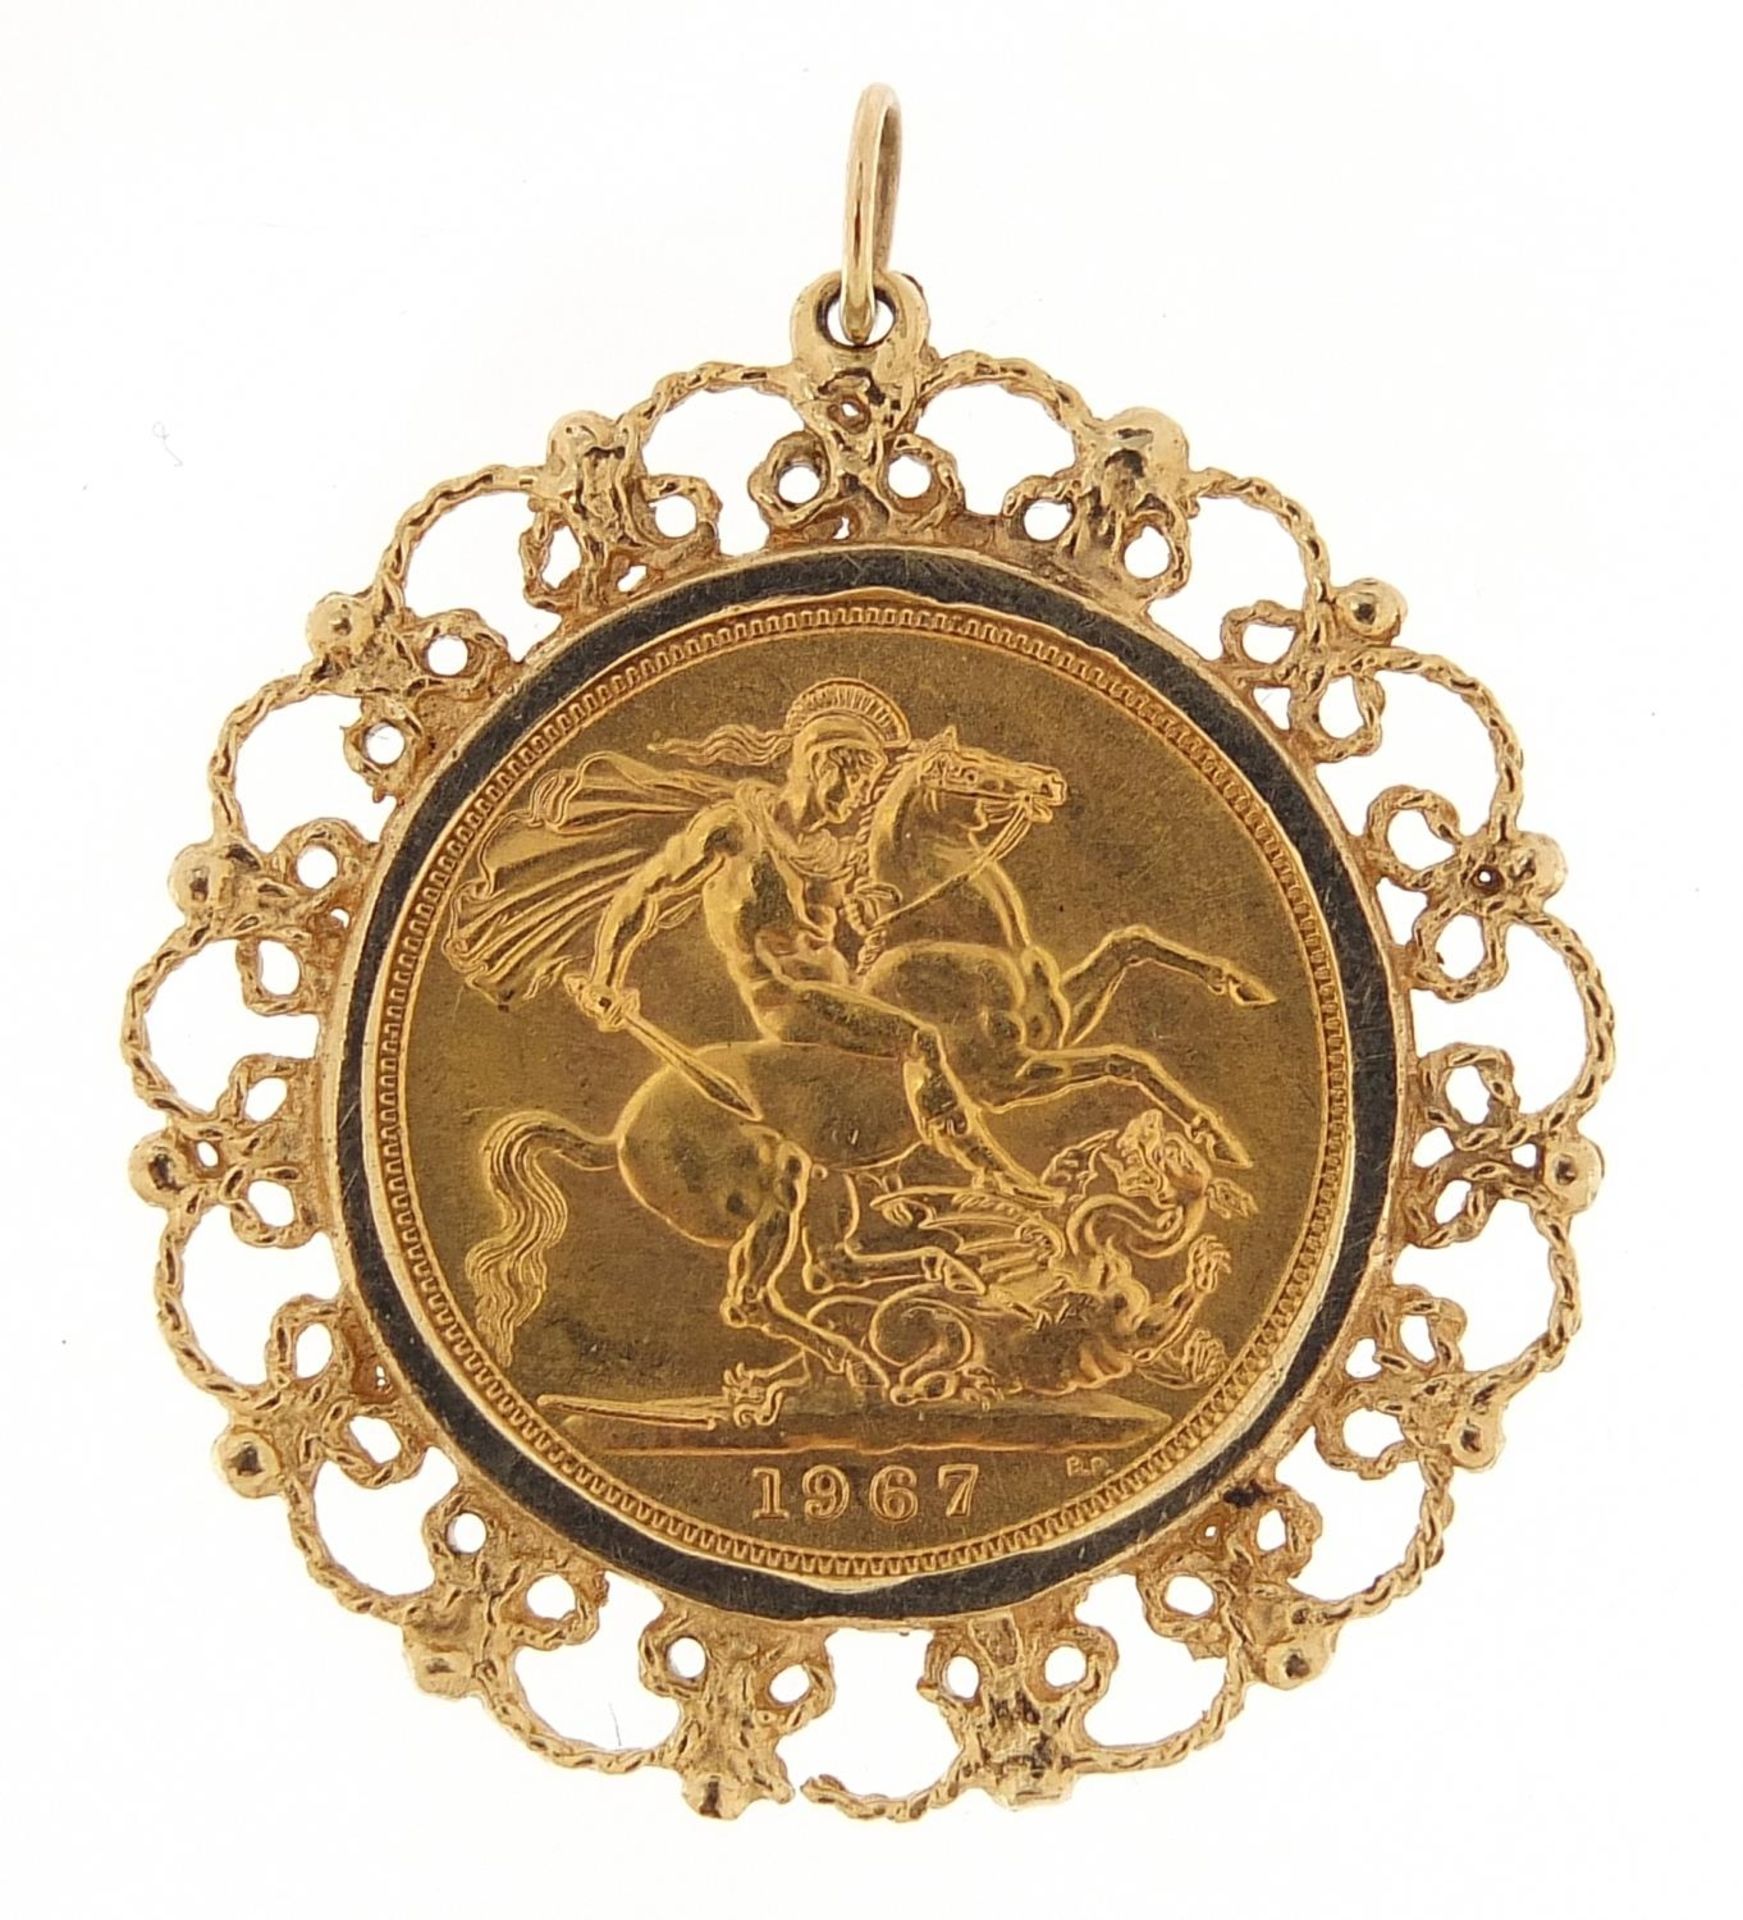 Elizabeth II 1967 gold sovereign with 9ct gold pendant mount, 3.4cm in diameter, 11.4g